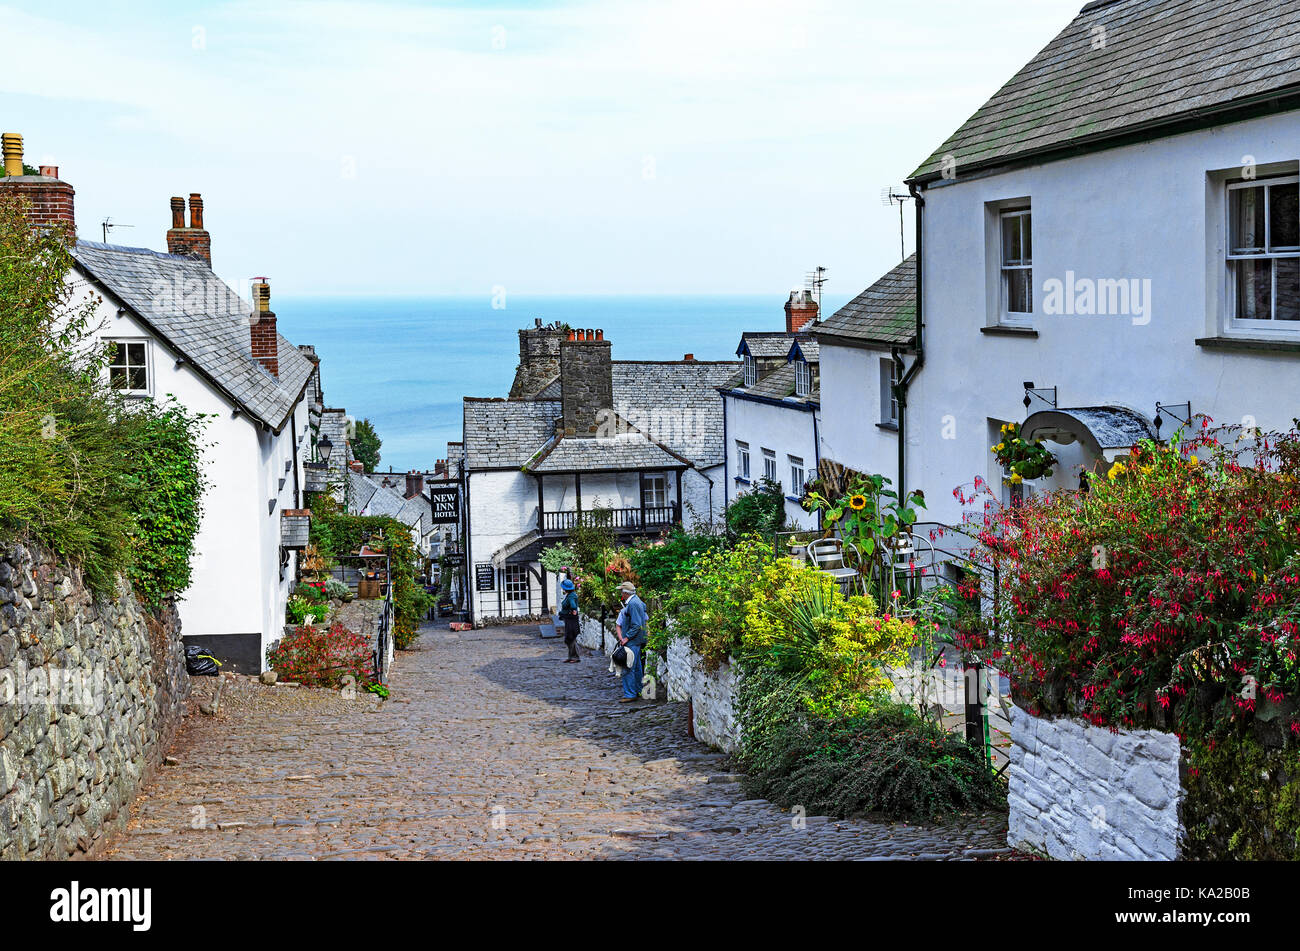 the coastal village of clovelly in devon, england, britain, uk. Stock Photo